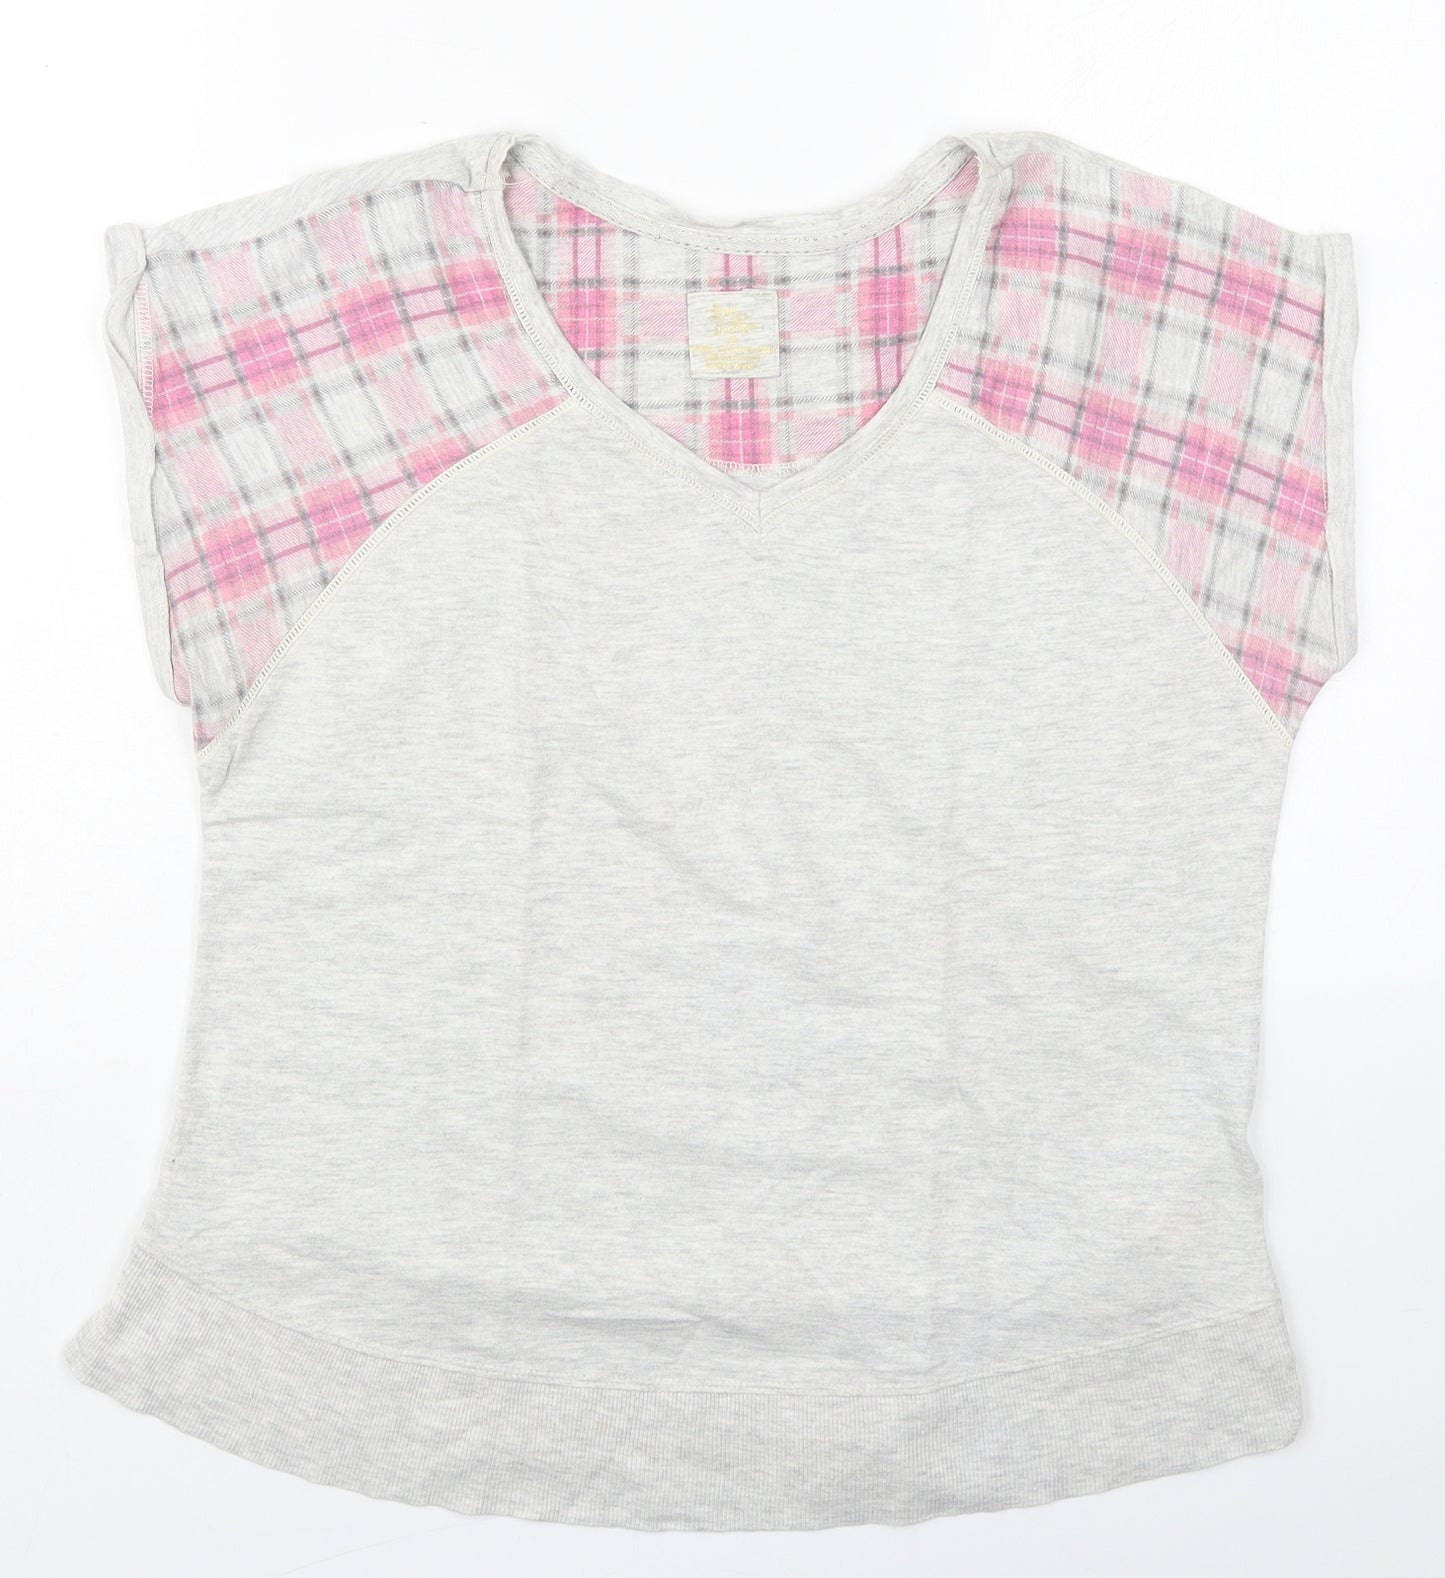 Primark Womens Grey Check Polyester Top Pyjama Top Size 10   - Pink